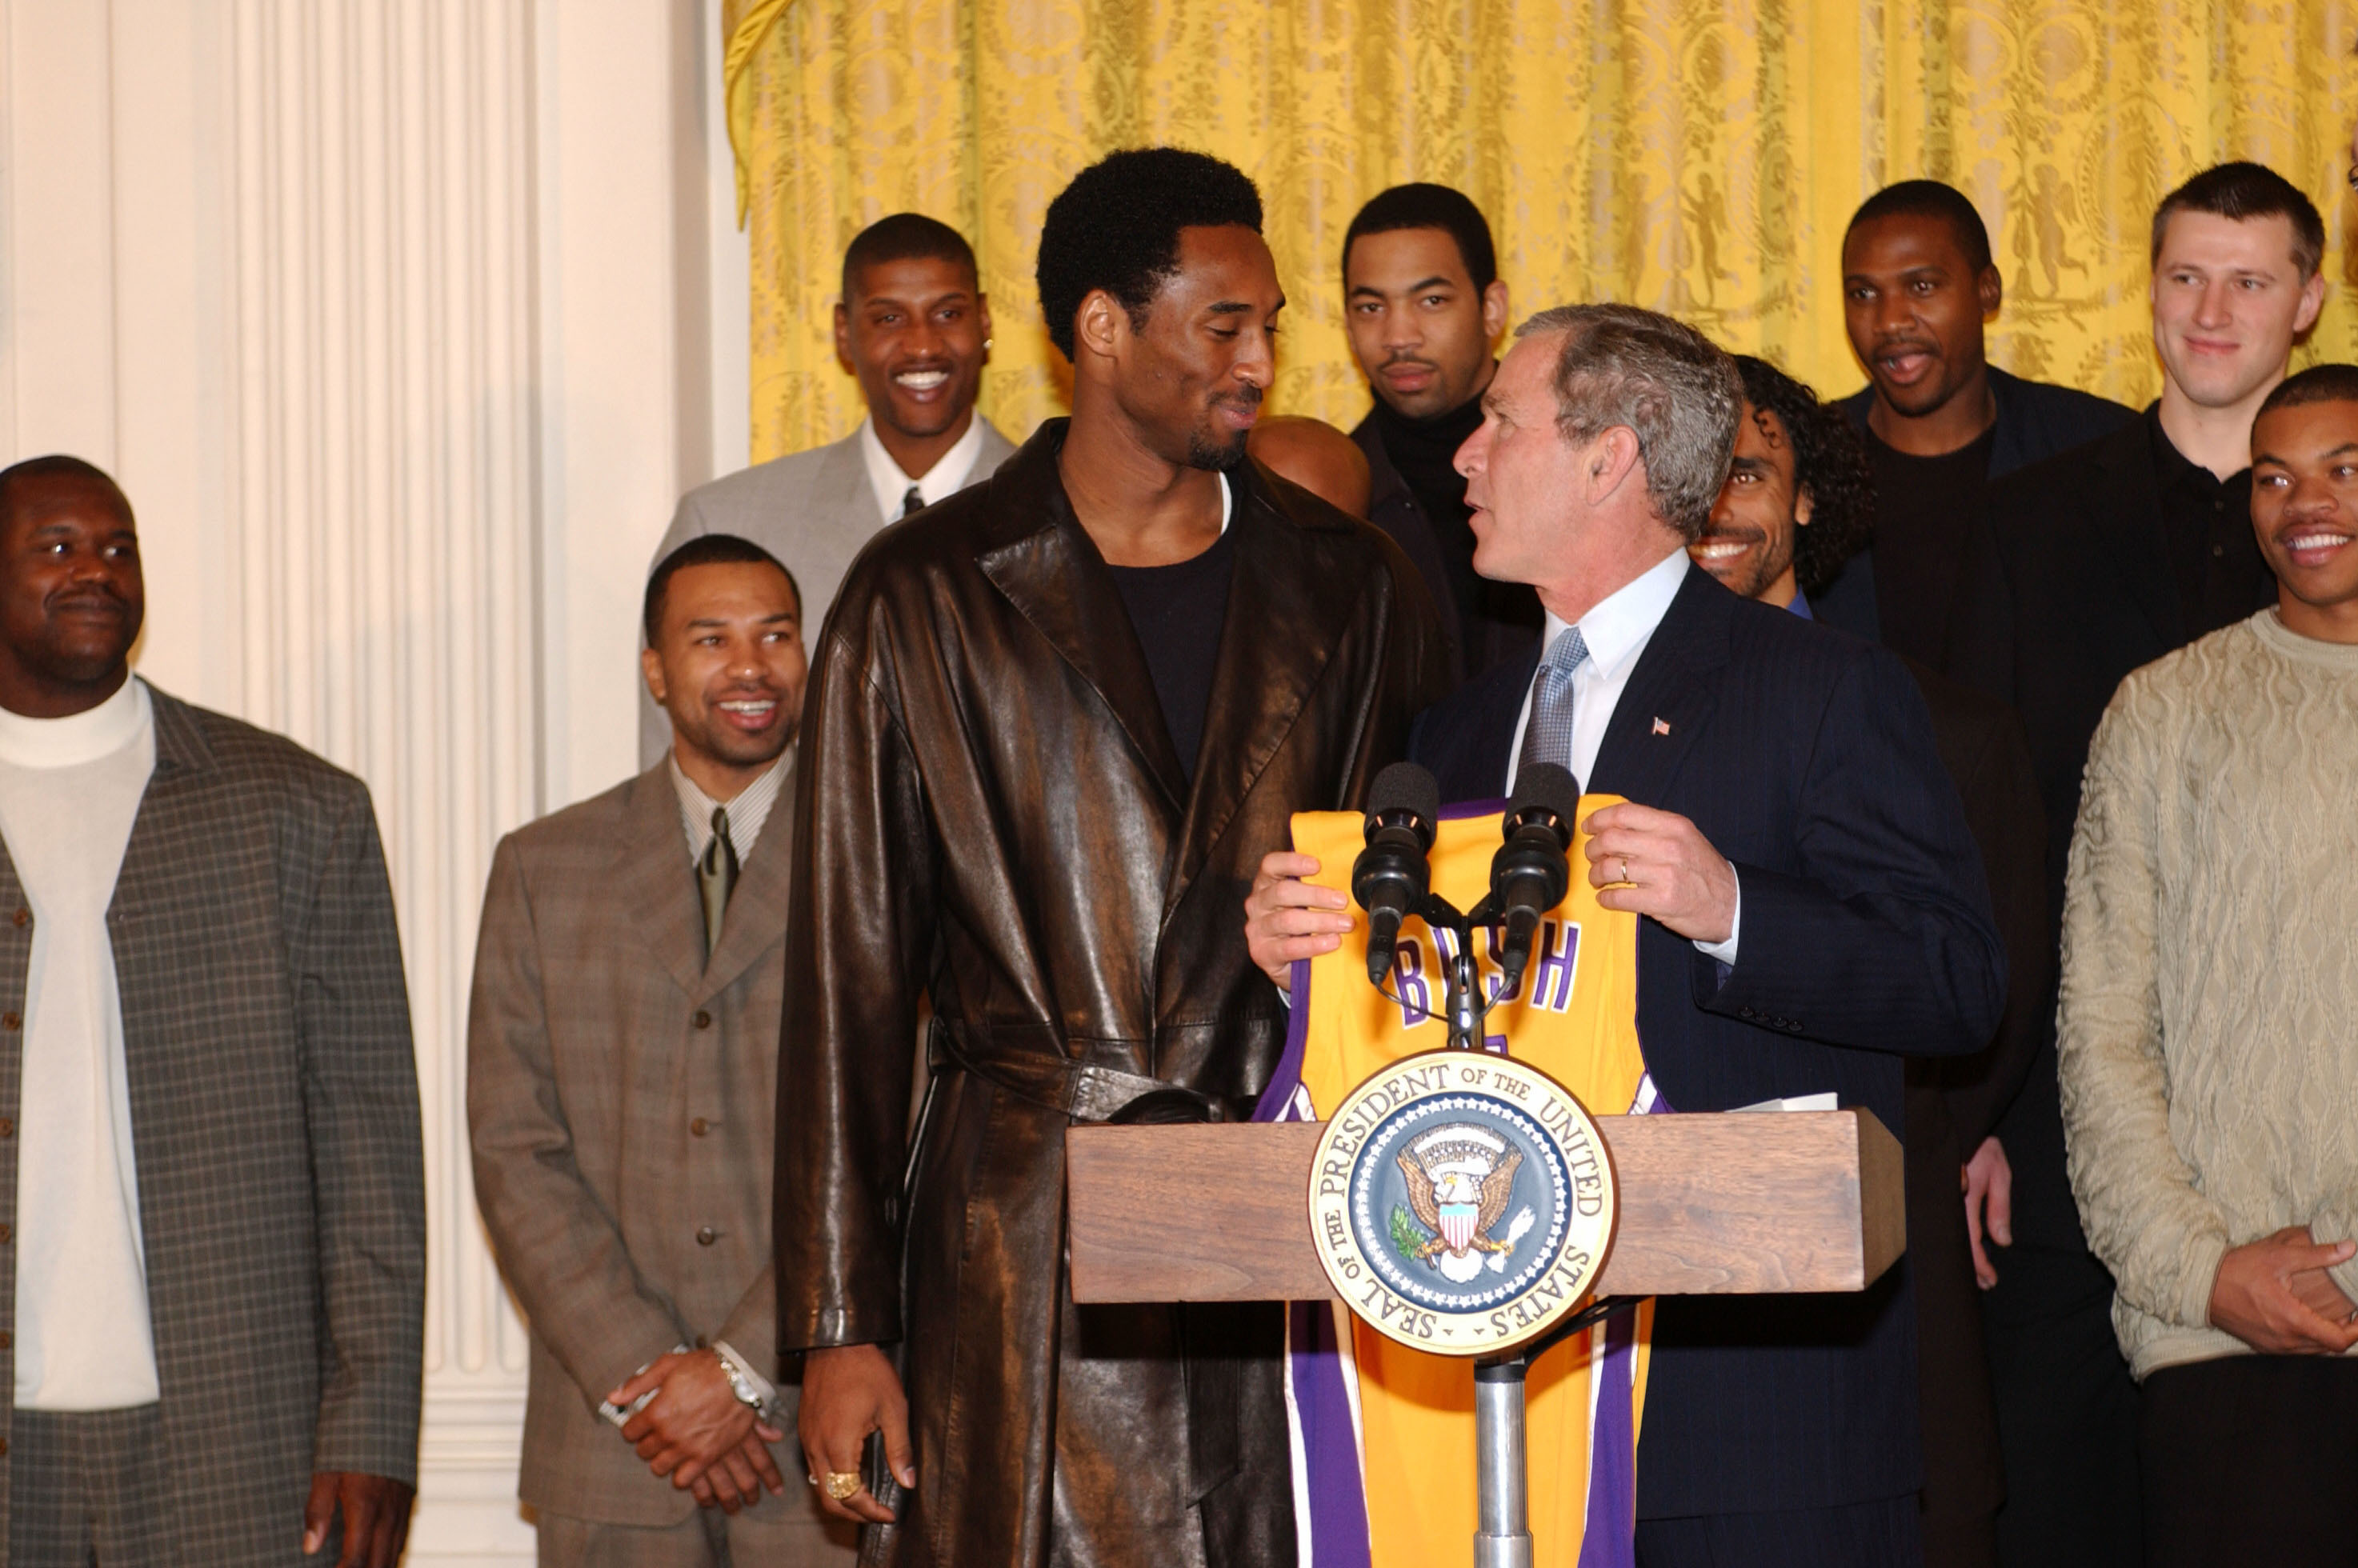 NBA The Three Peat Championships jacket worn by Kobe Bryant on 2002